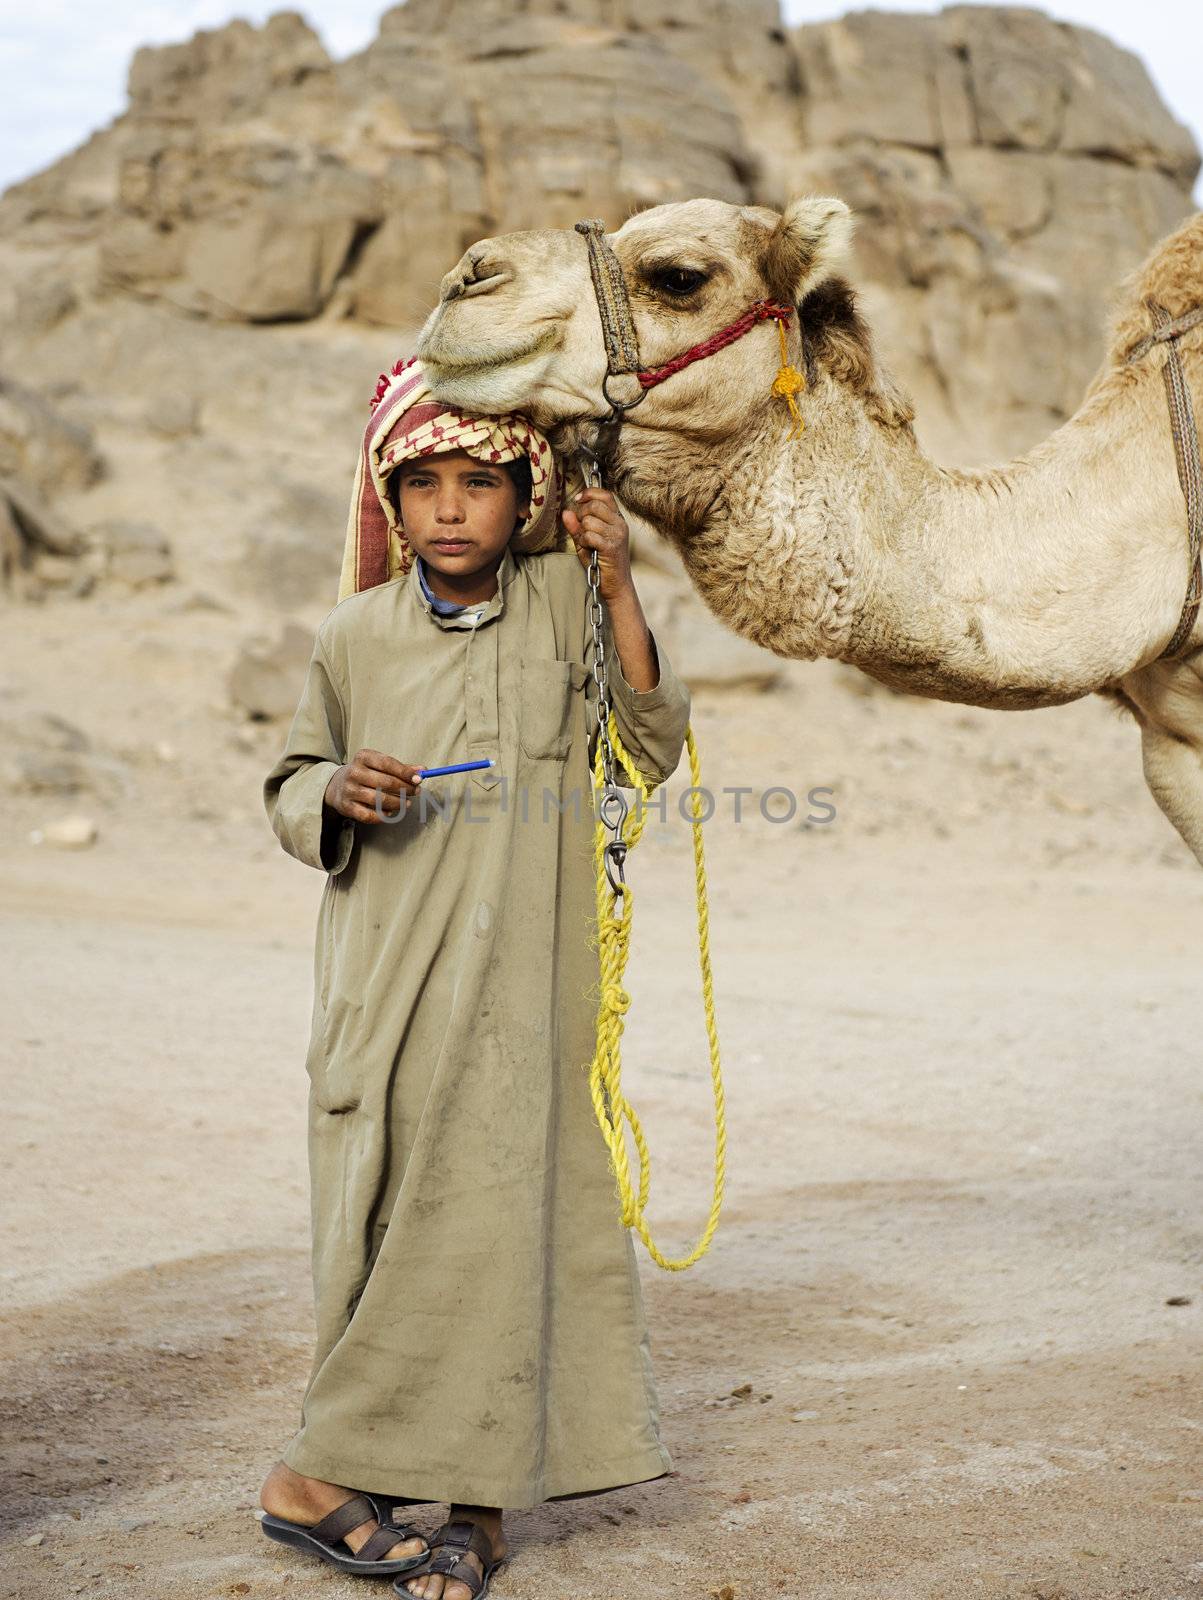 HURGHADA - JAN 30: Bedouin boy pulling a camel in Sahara desert.Jan 30,2013 in Hurghada,Egypt.